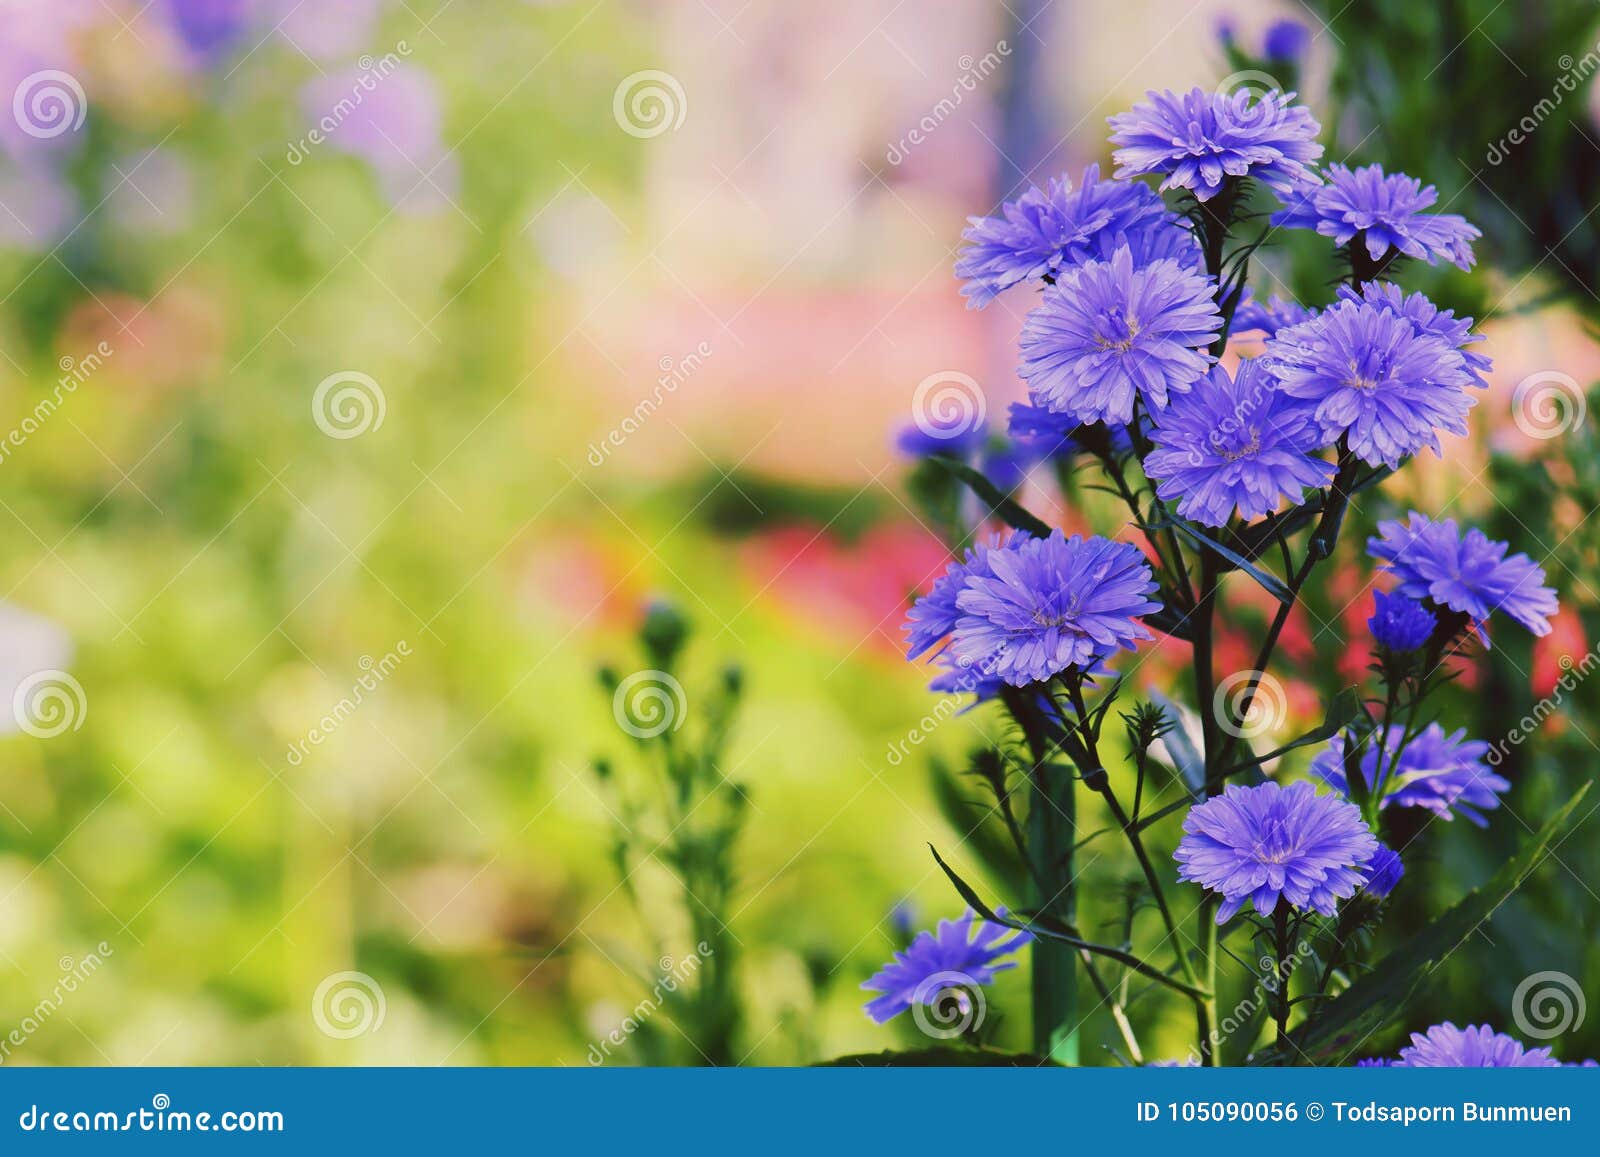 Fleur violette en hiver photo stock. Image du ressort - 105090056